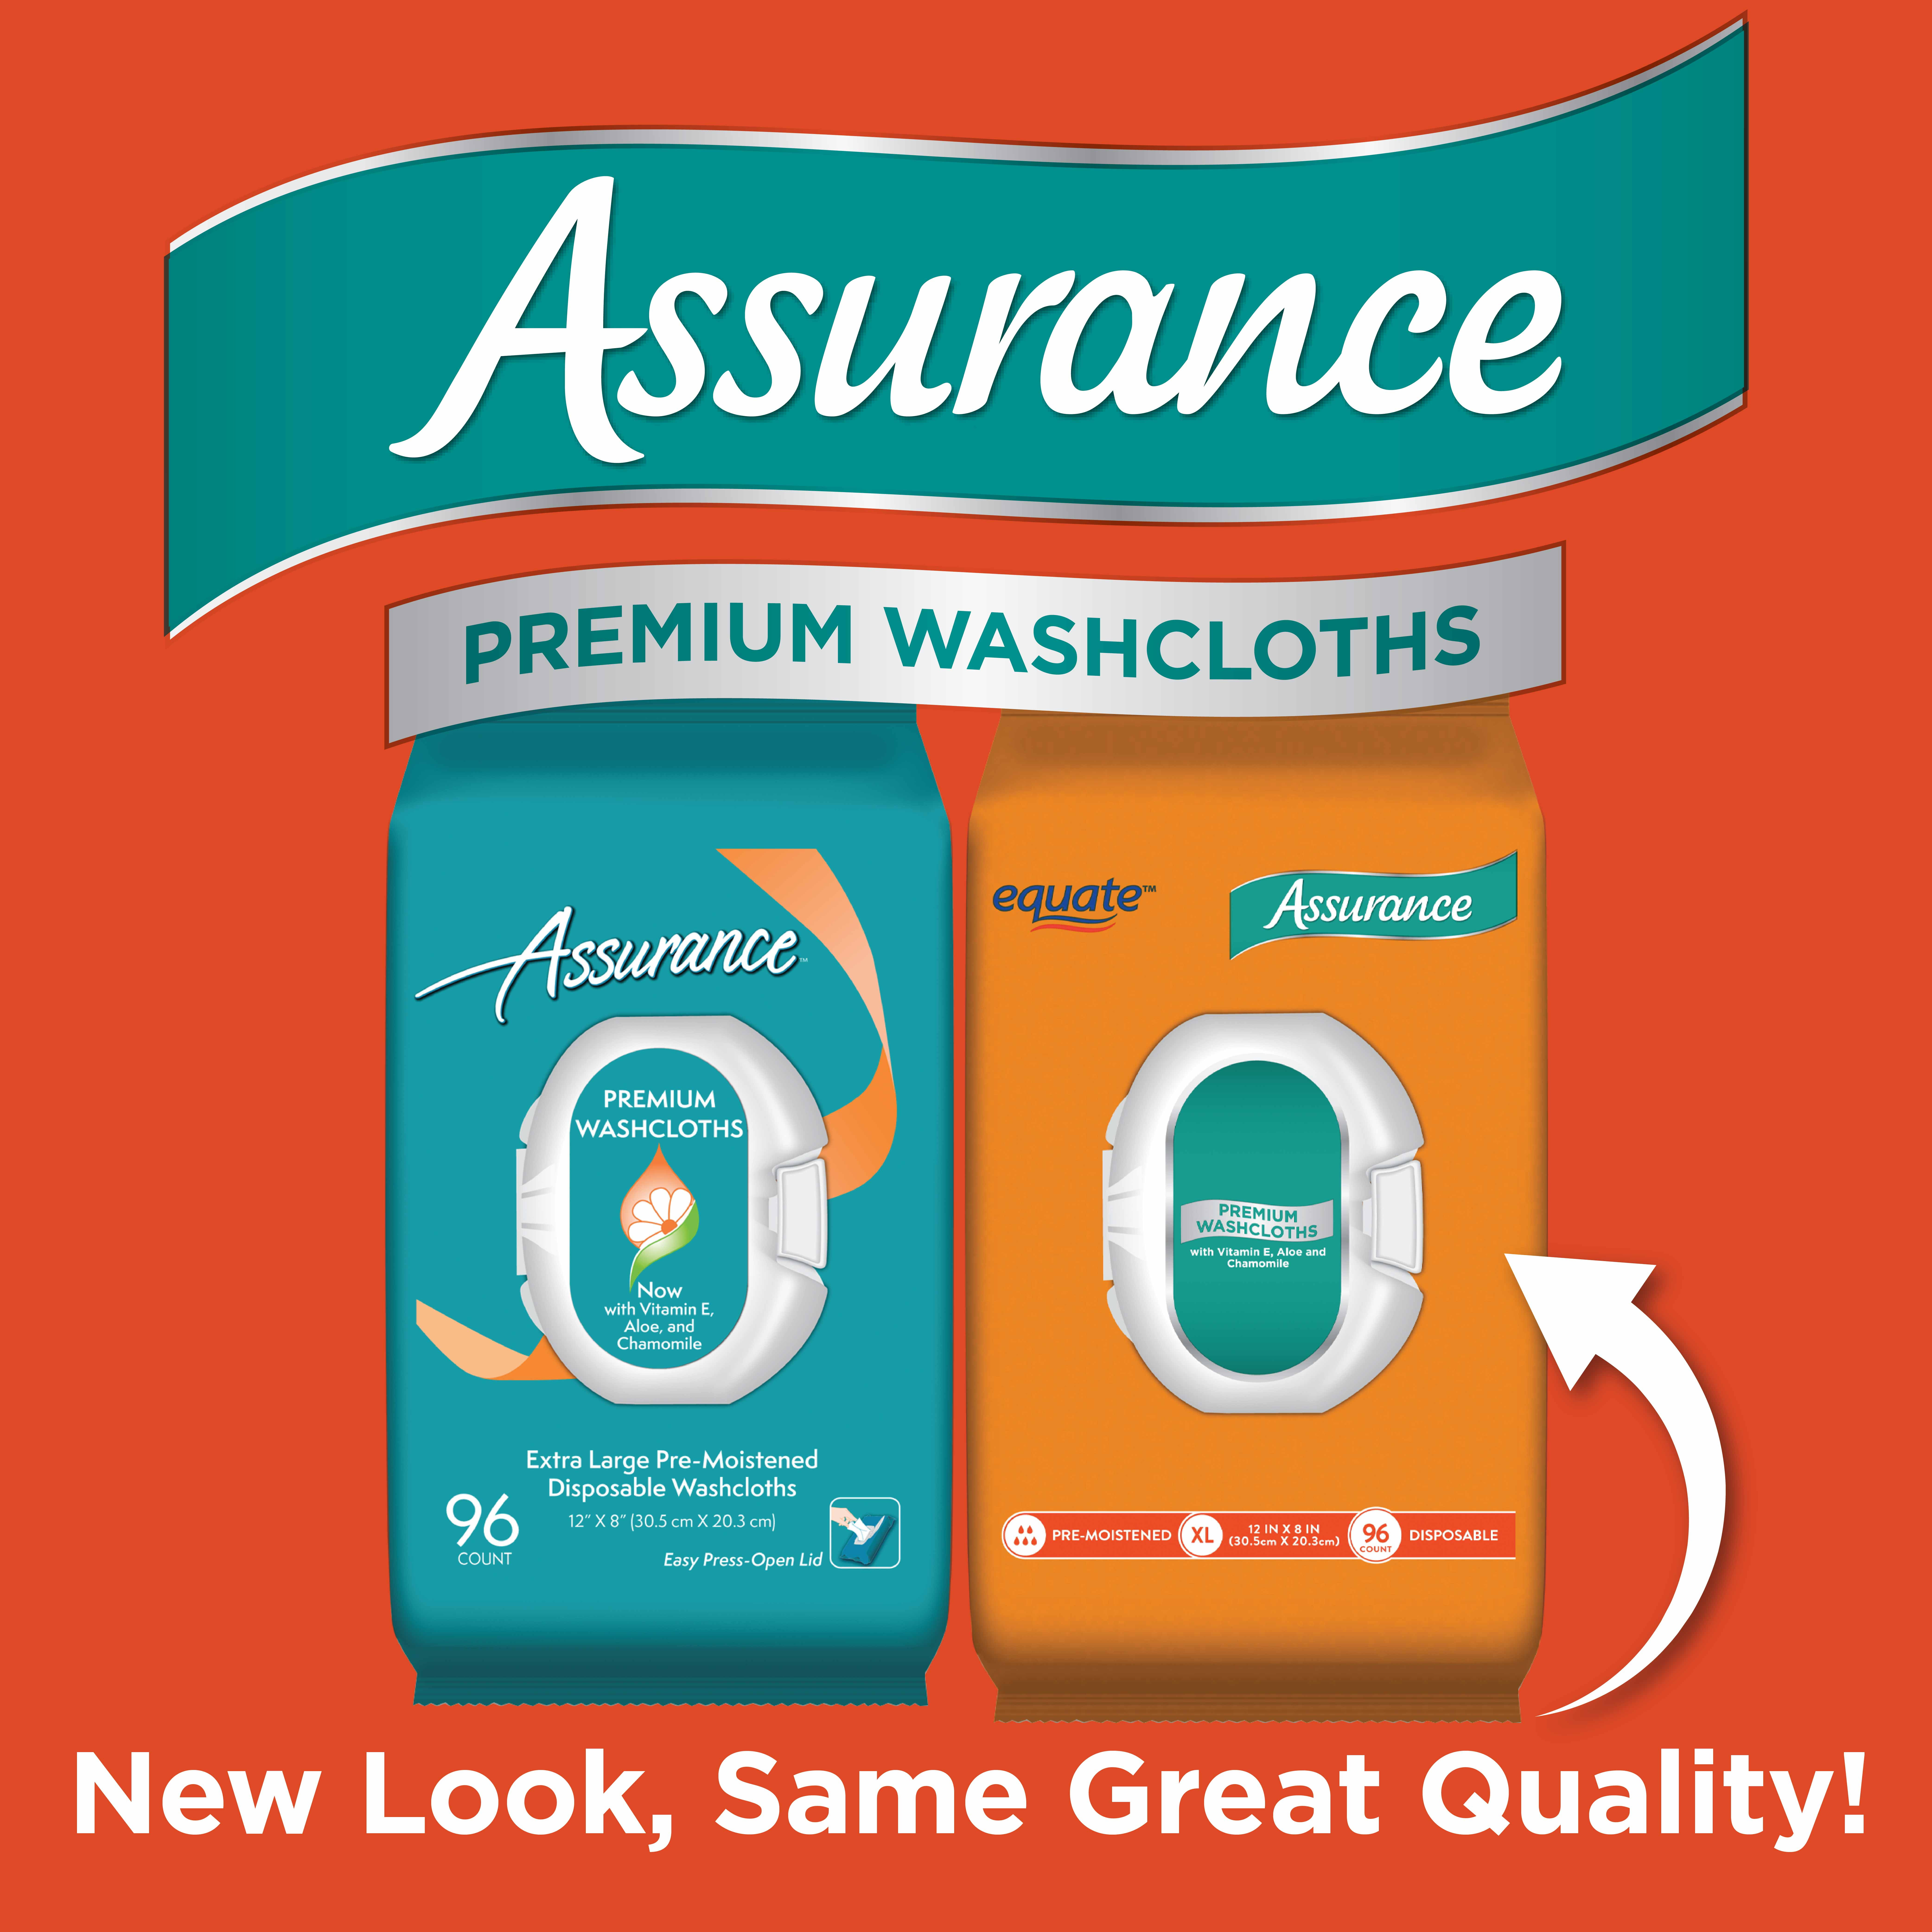 Assurance Premium Pre-Moistened Disposable Washcloths 96 Count EX LG. 12” x 8” 